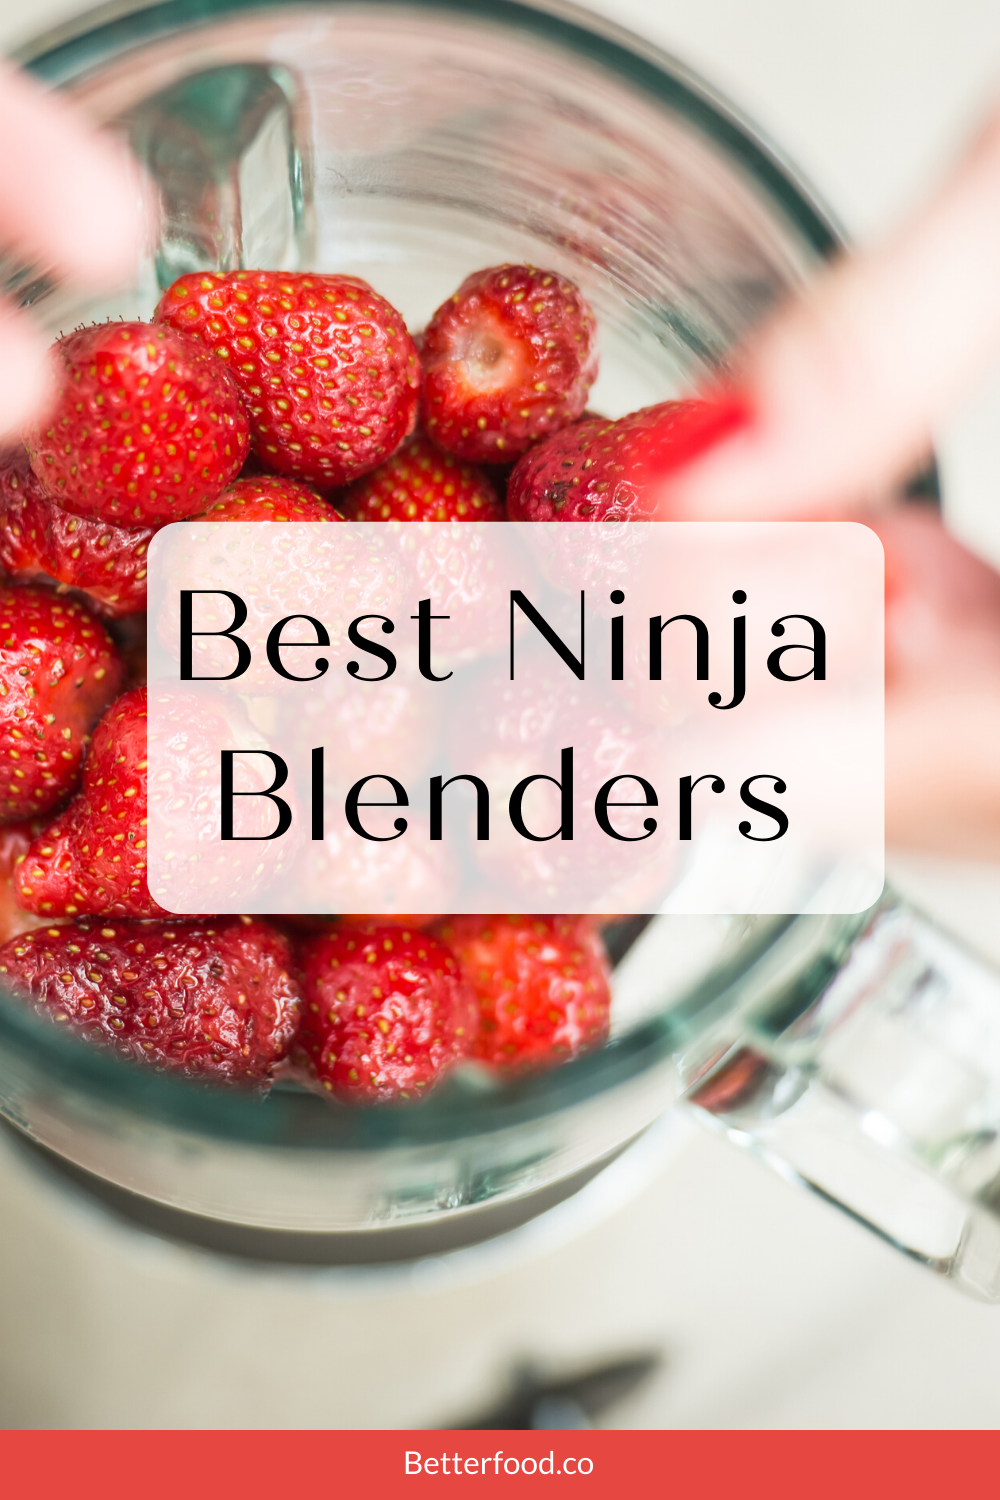 What is the Best Ninja Blender?